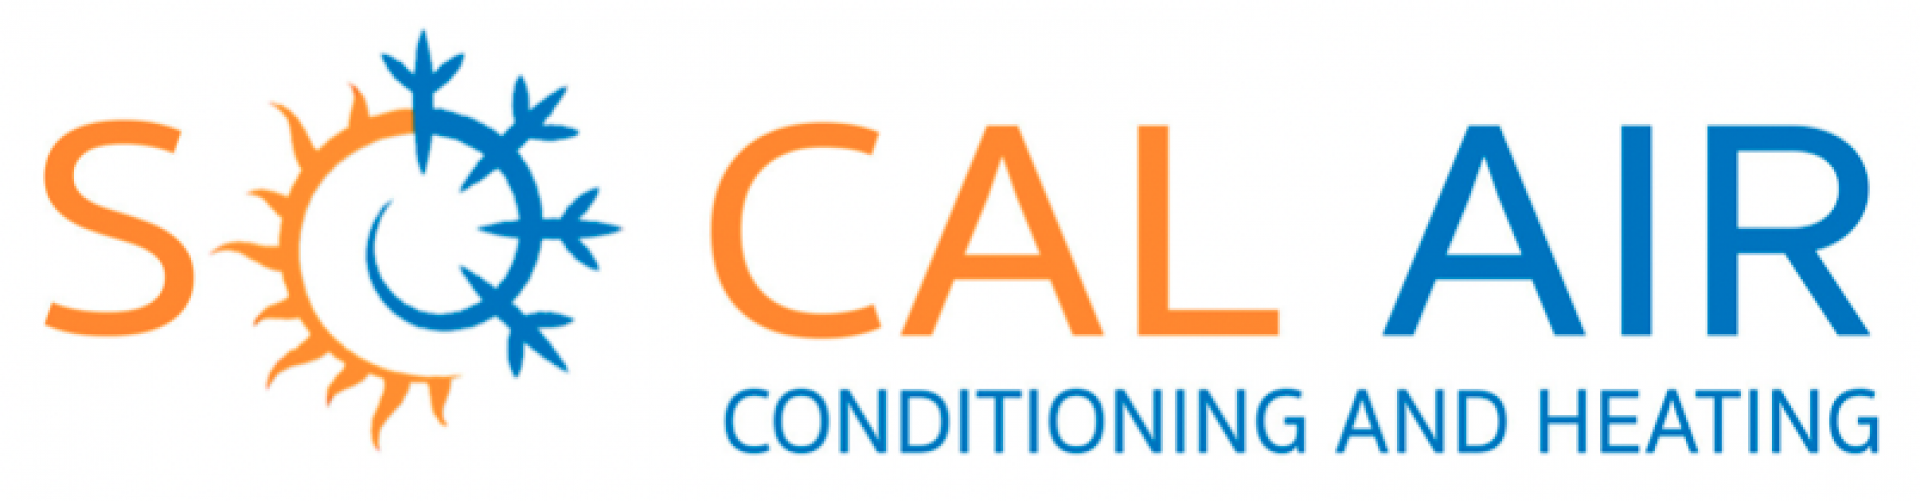 So Cal Air Conditioning Inc company logo